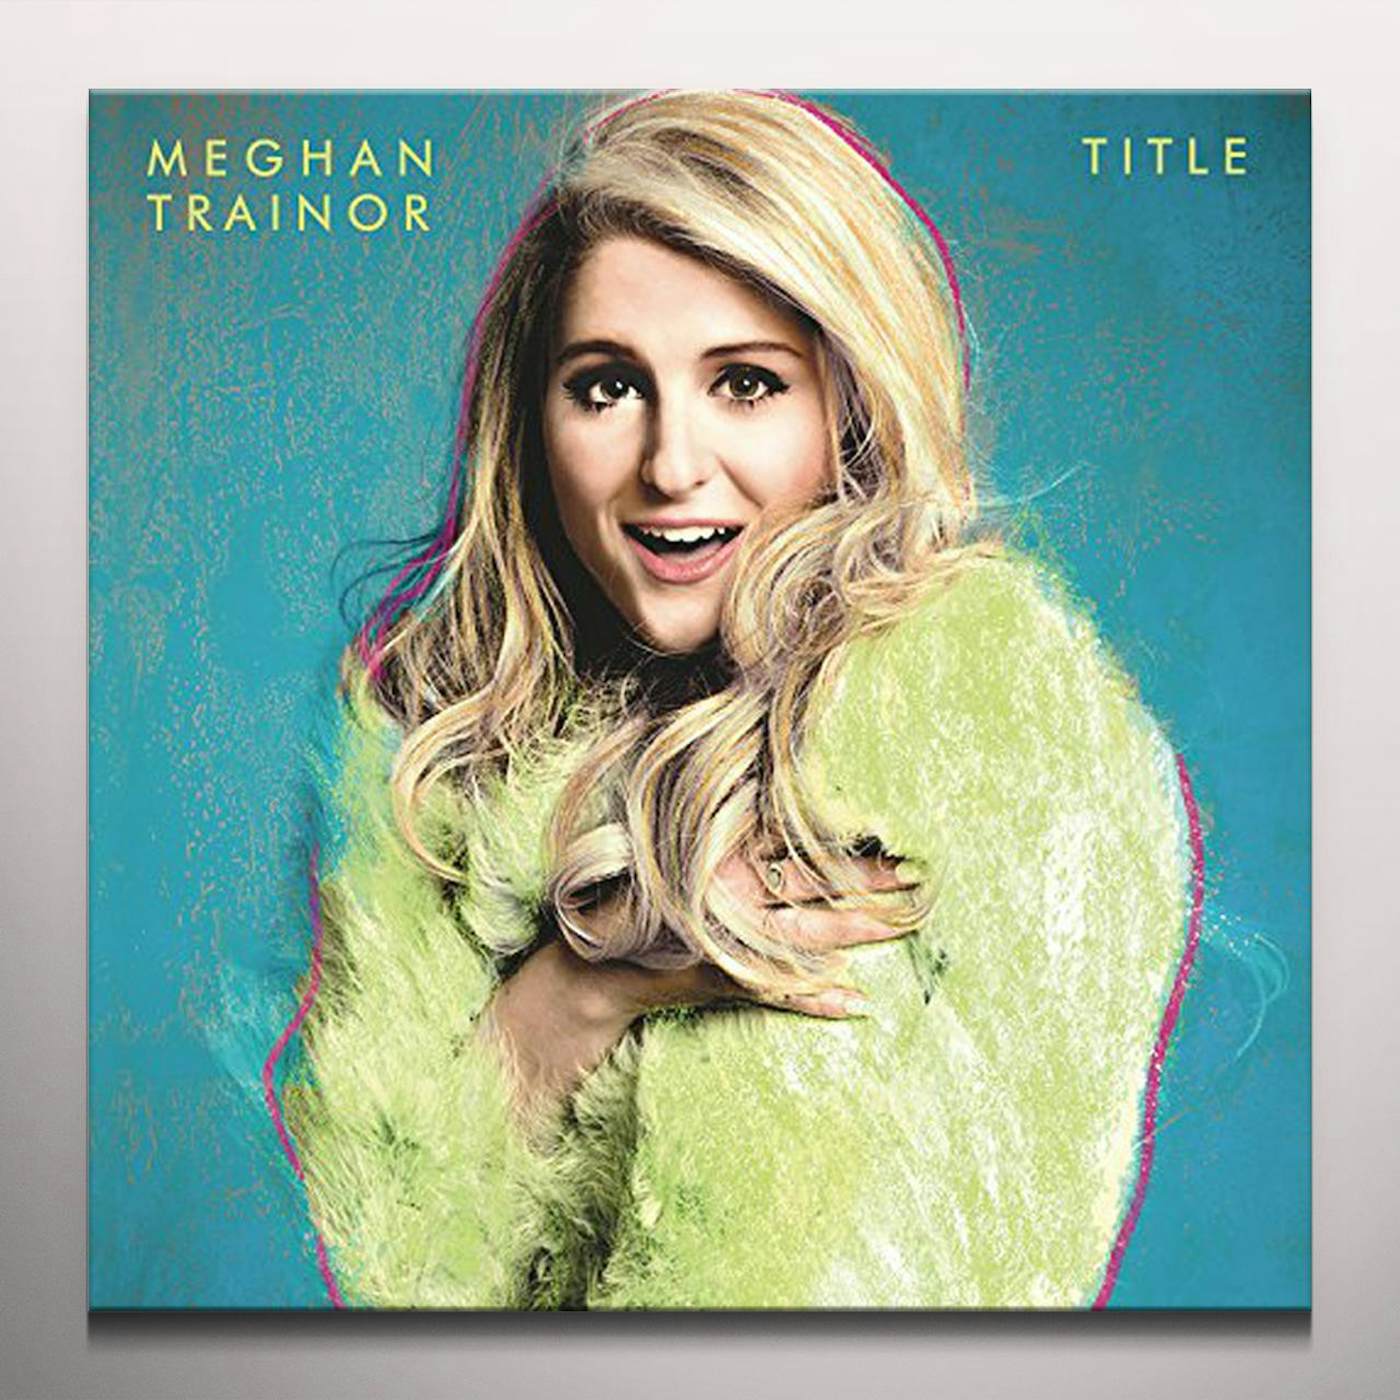 Meghan Trainor TITLE    (DLI) Vinyl Record - Blue Vinyl, Colored Vinyl, Deluxe Edition